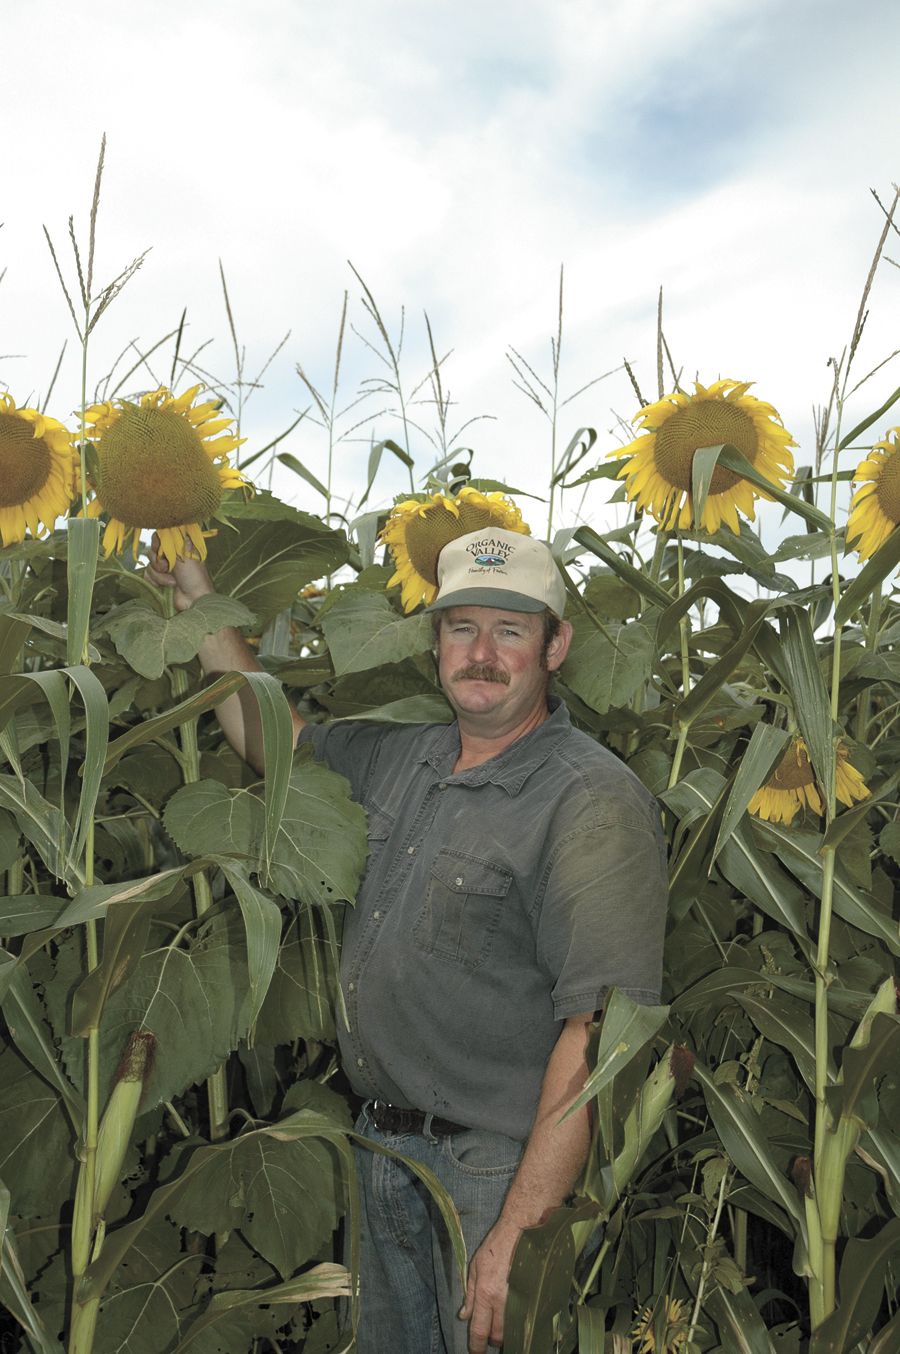 Image of Farmer harvesting corn and sunflowers